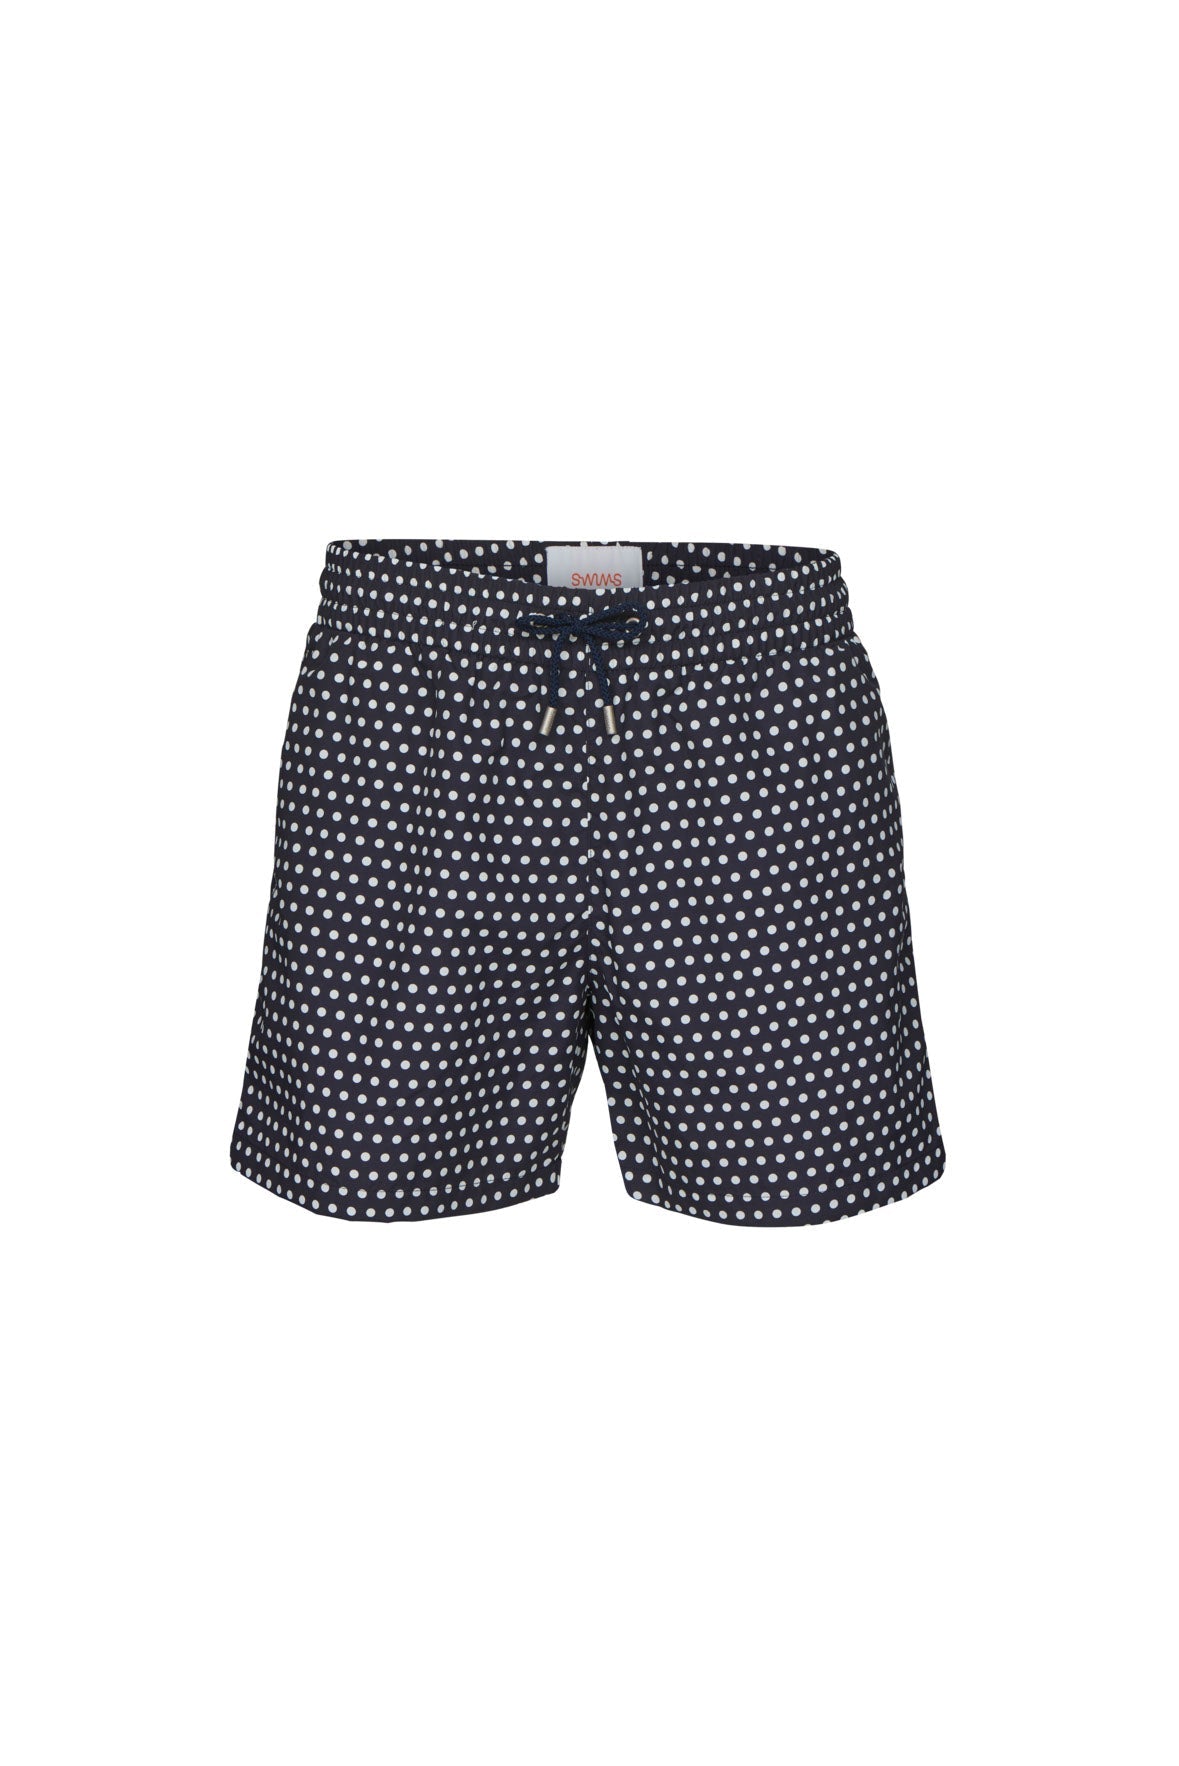 The Printed Swim Shorts - Navy/White Dots